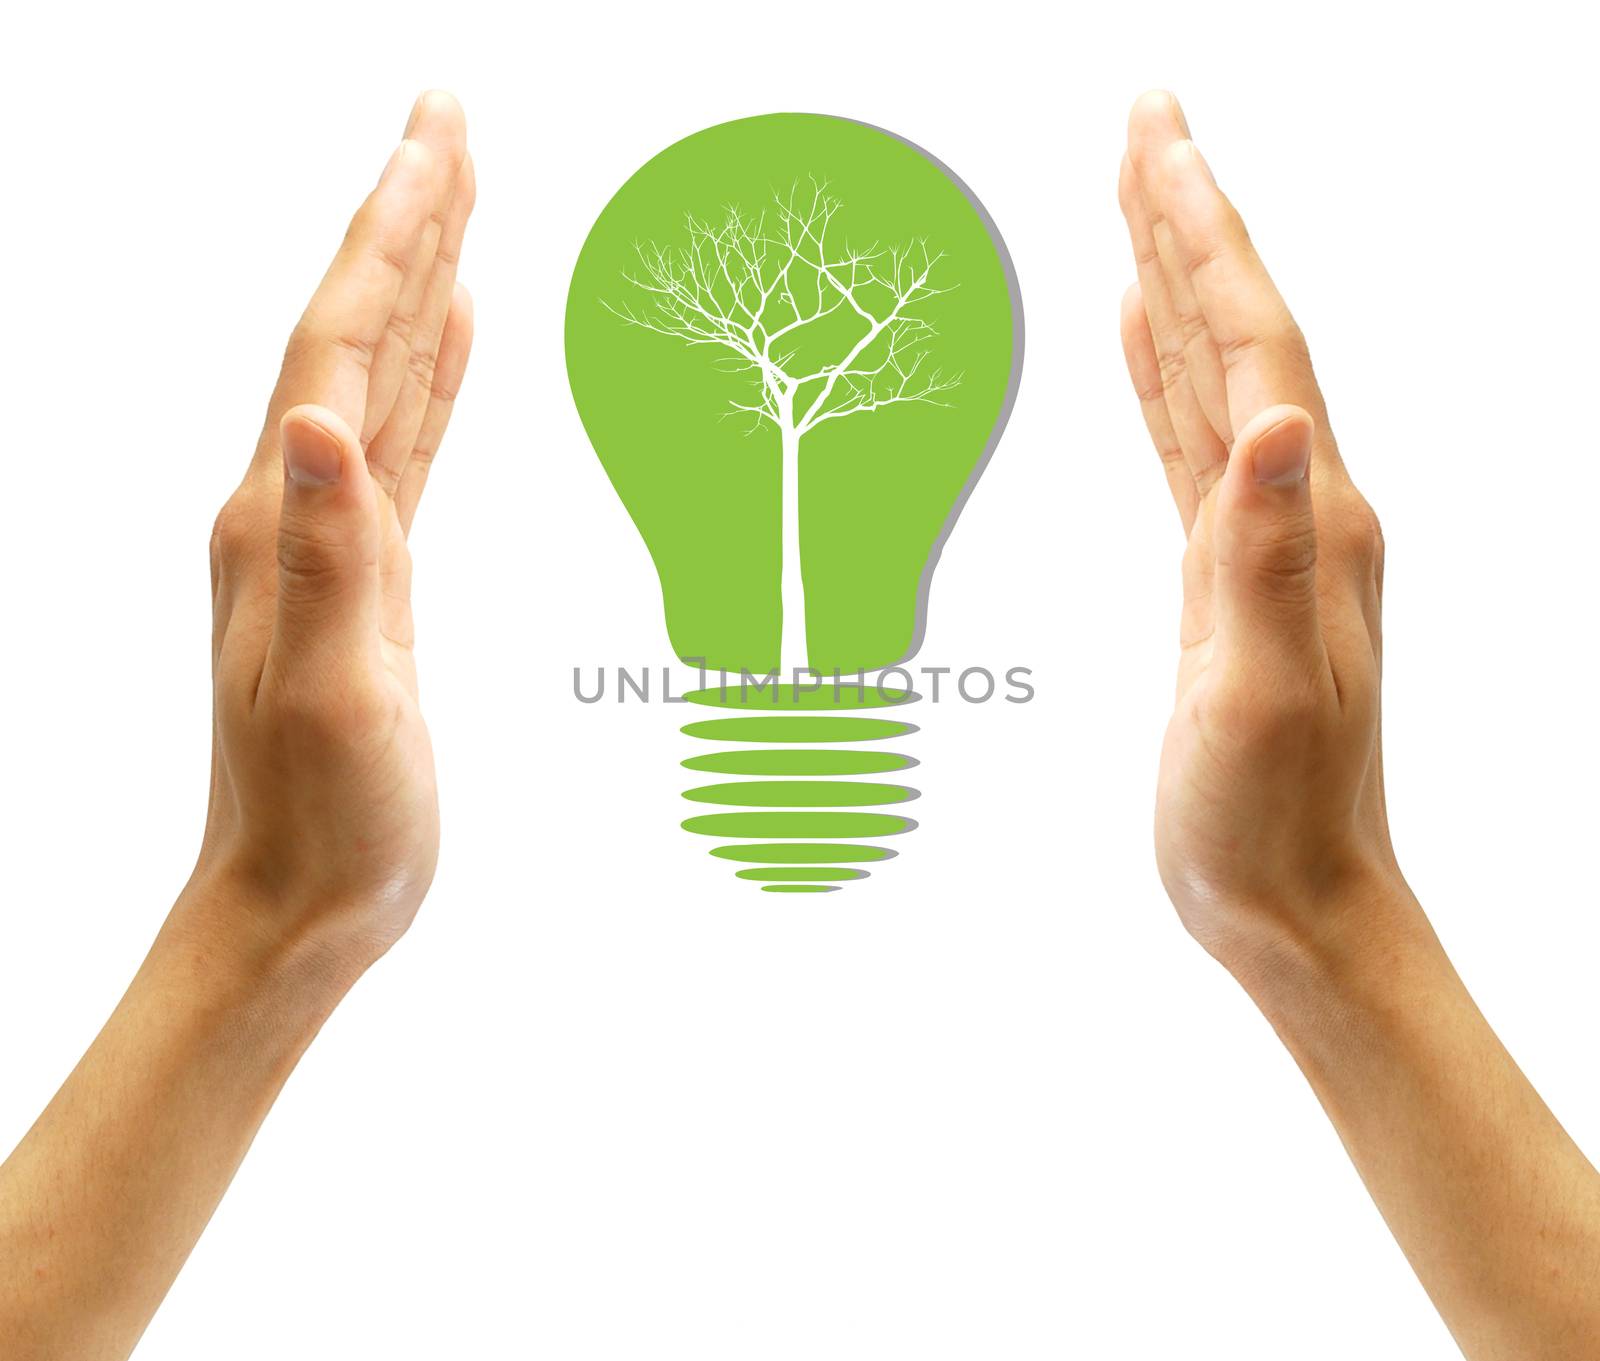 Concept  tree in light bulb symbol of renewable energy